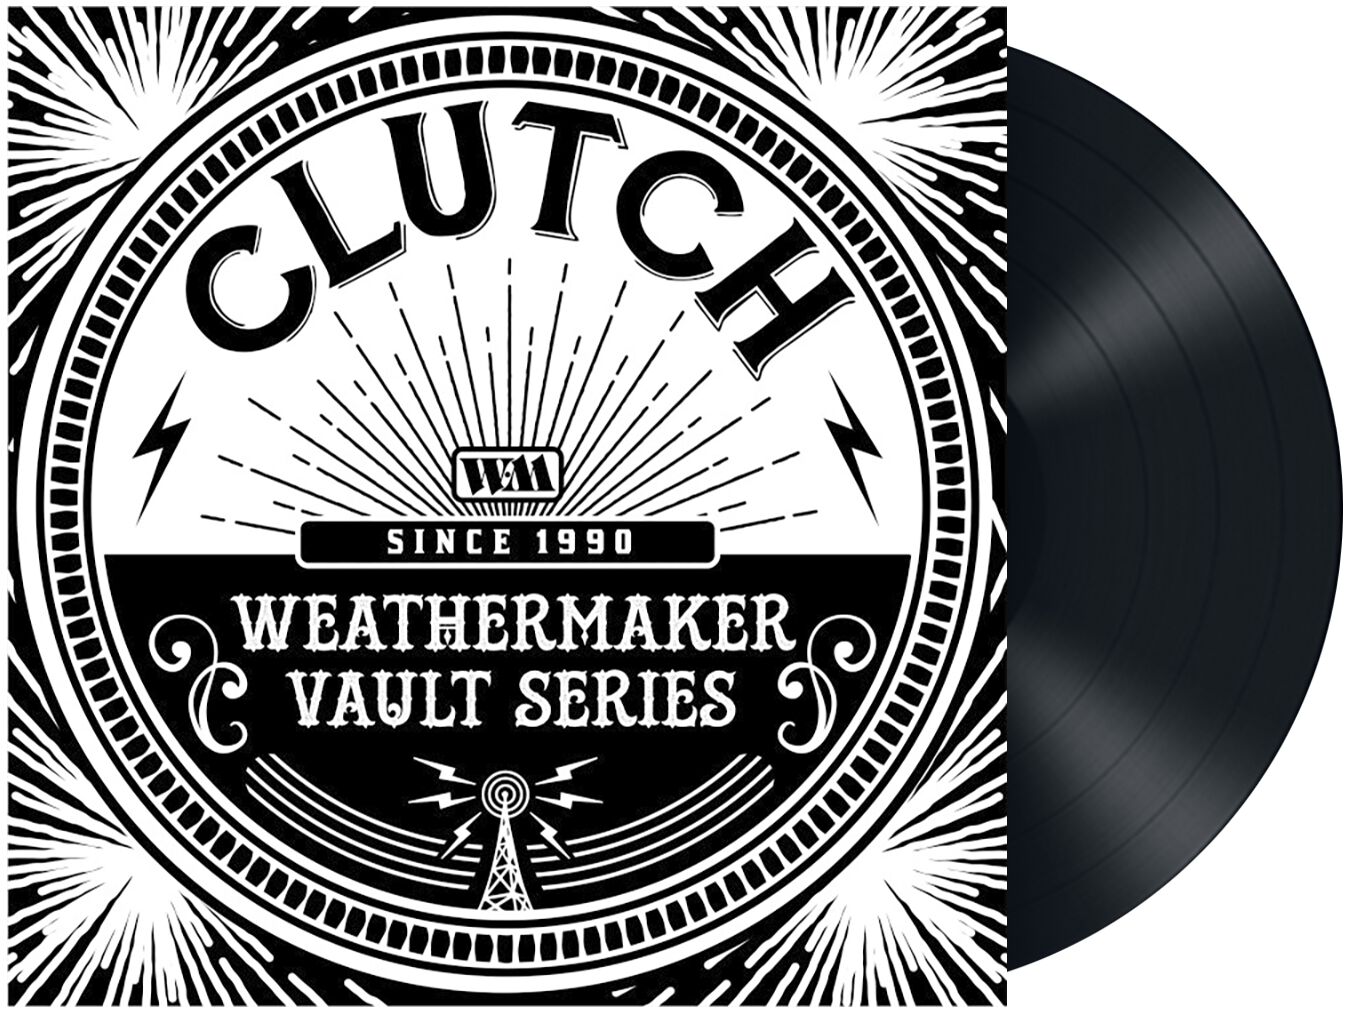 Clutch - The Weathermaker vault series Vol.1 - LP - multicolor